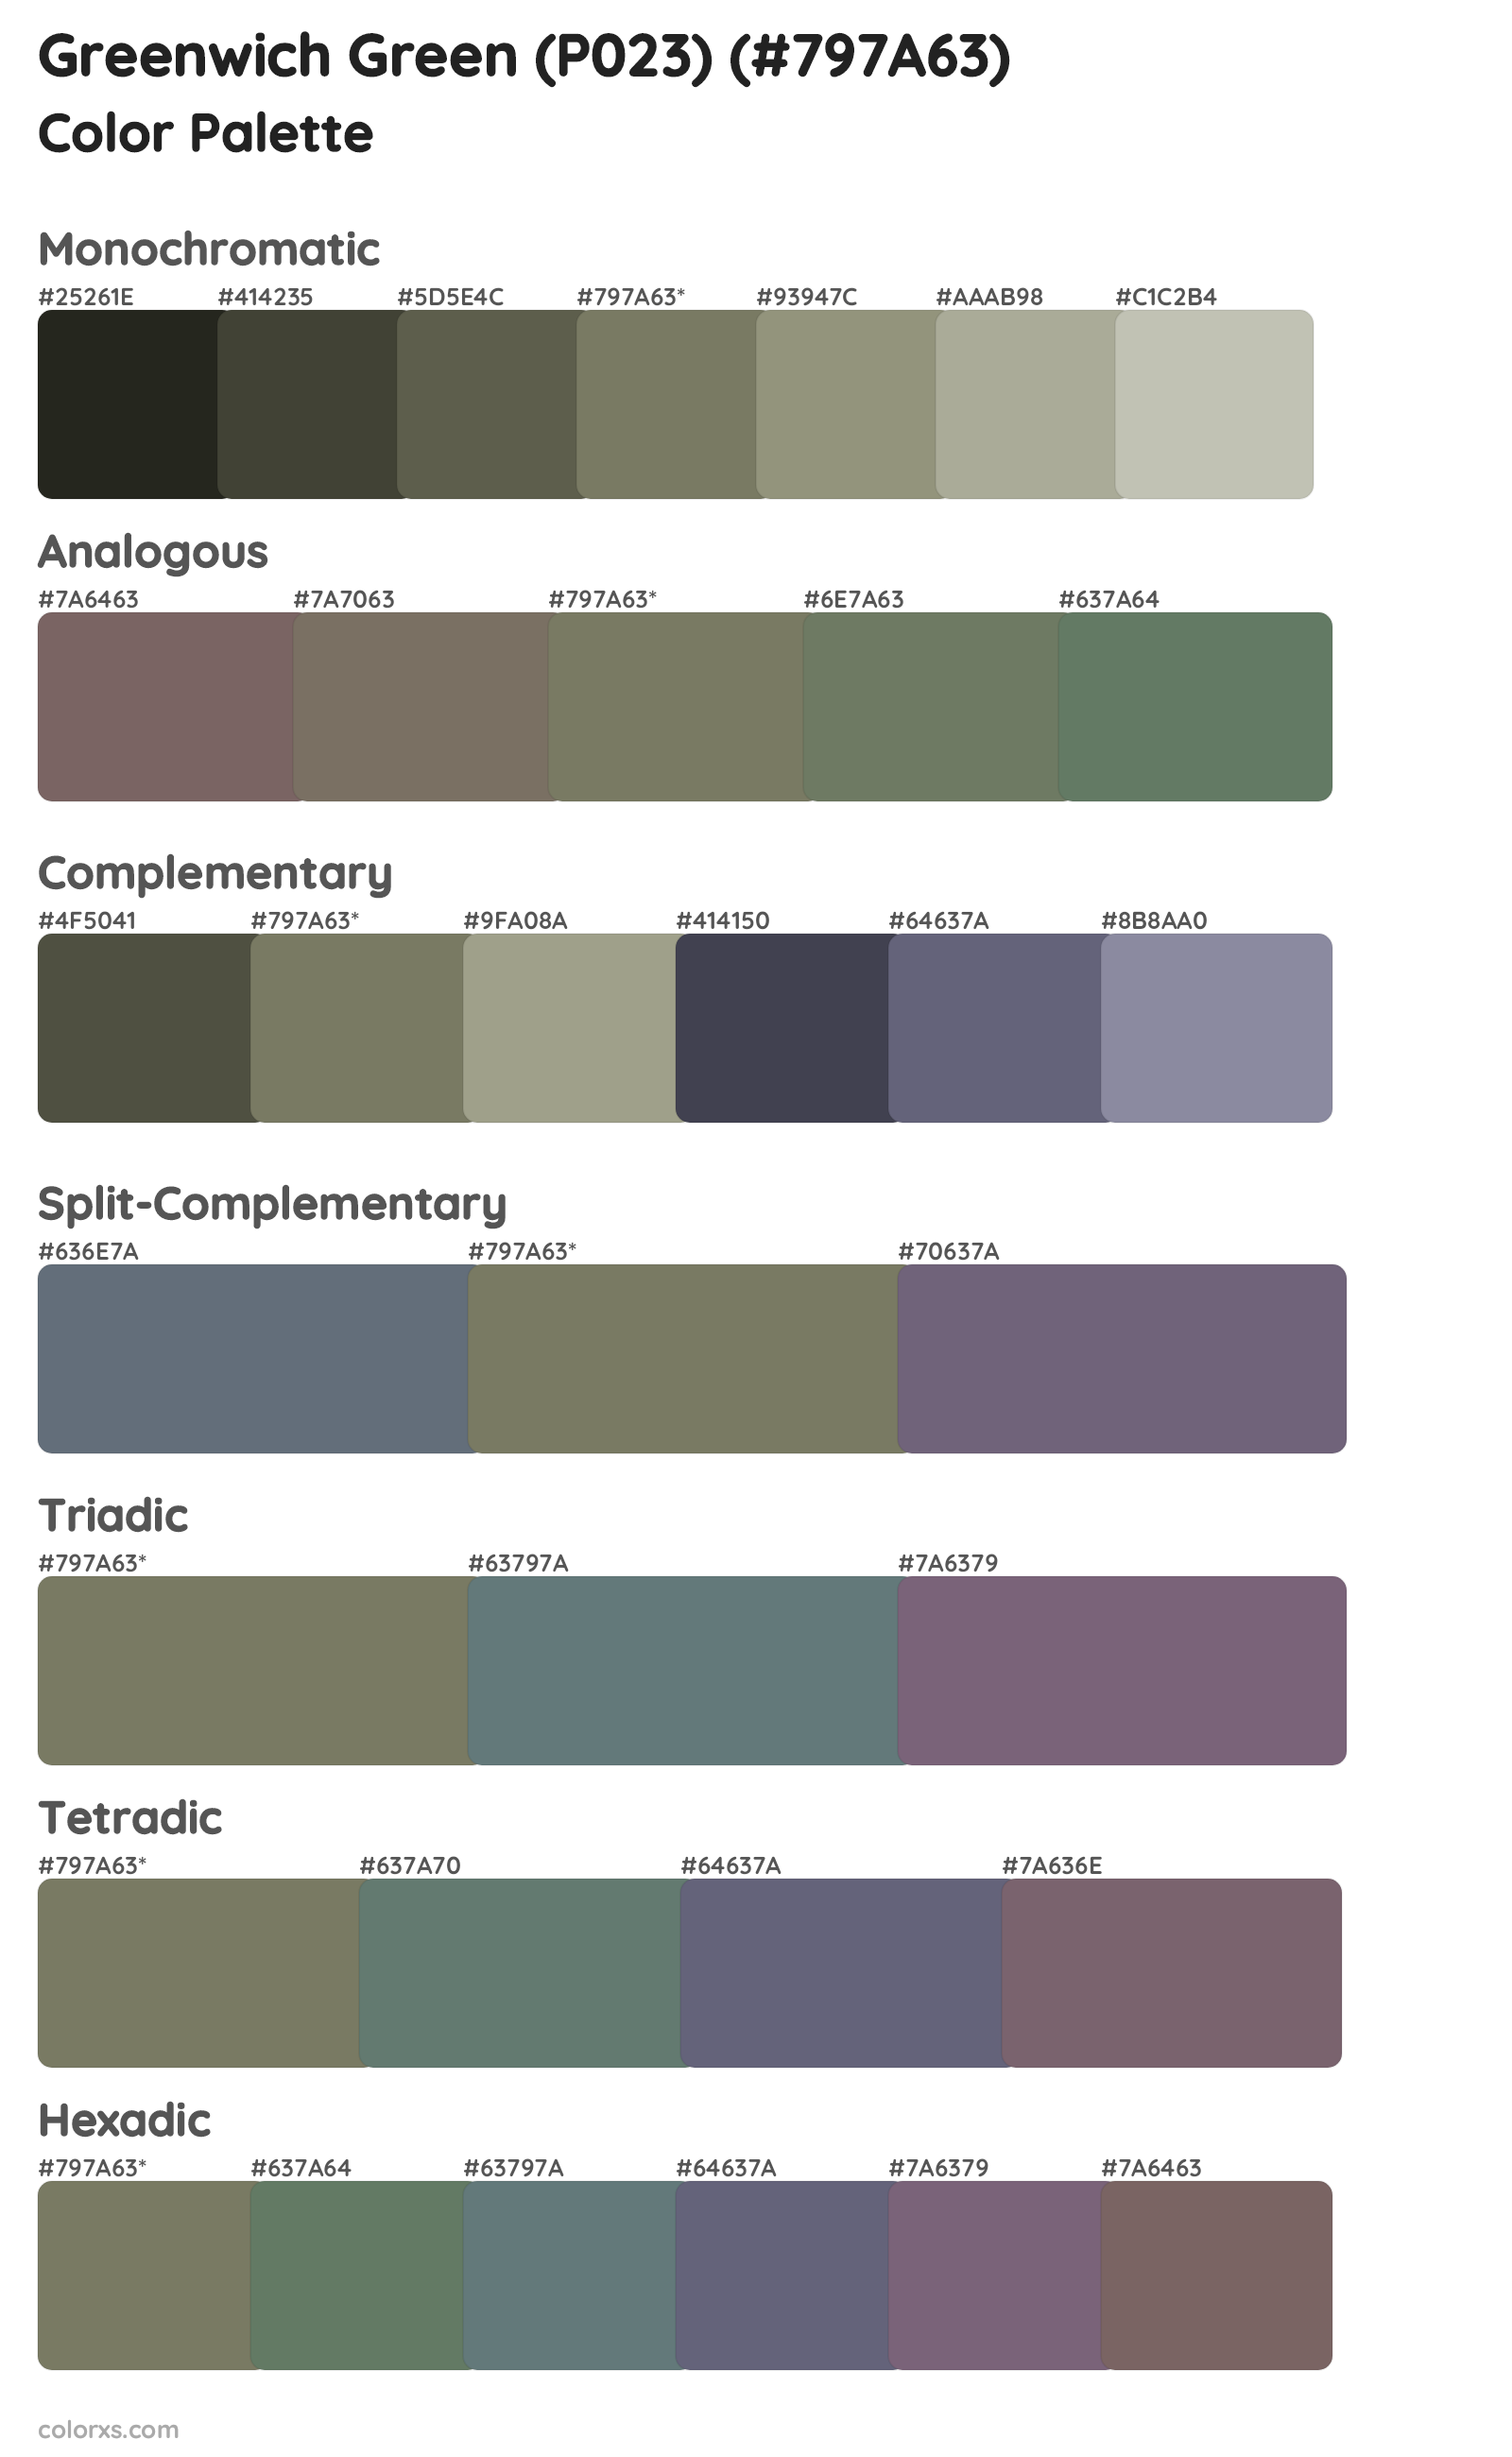 Greenwich Green (P023) Color Scheme Palettes